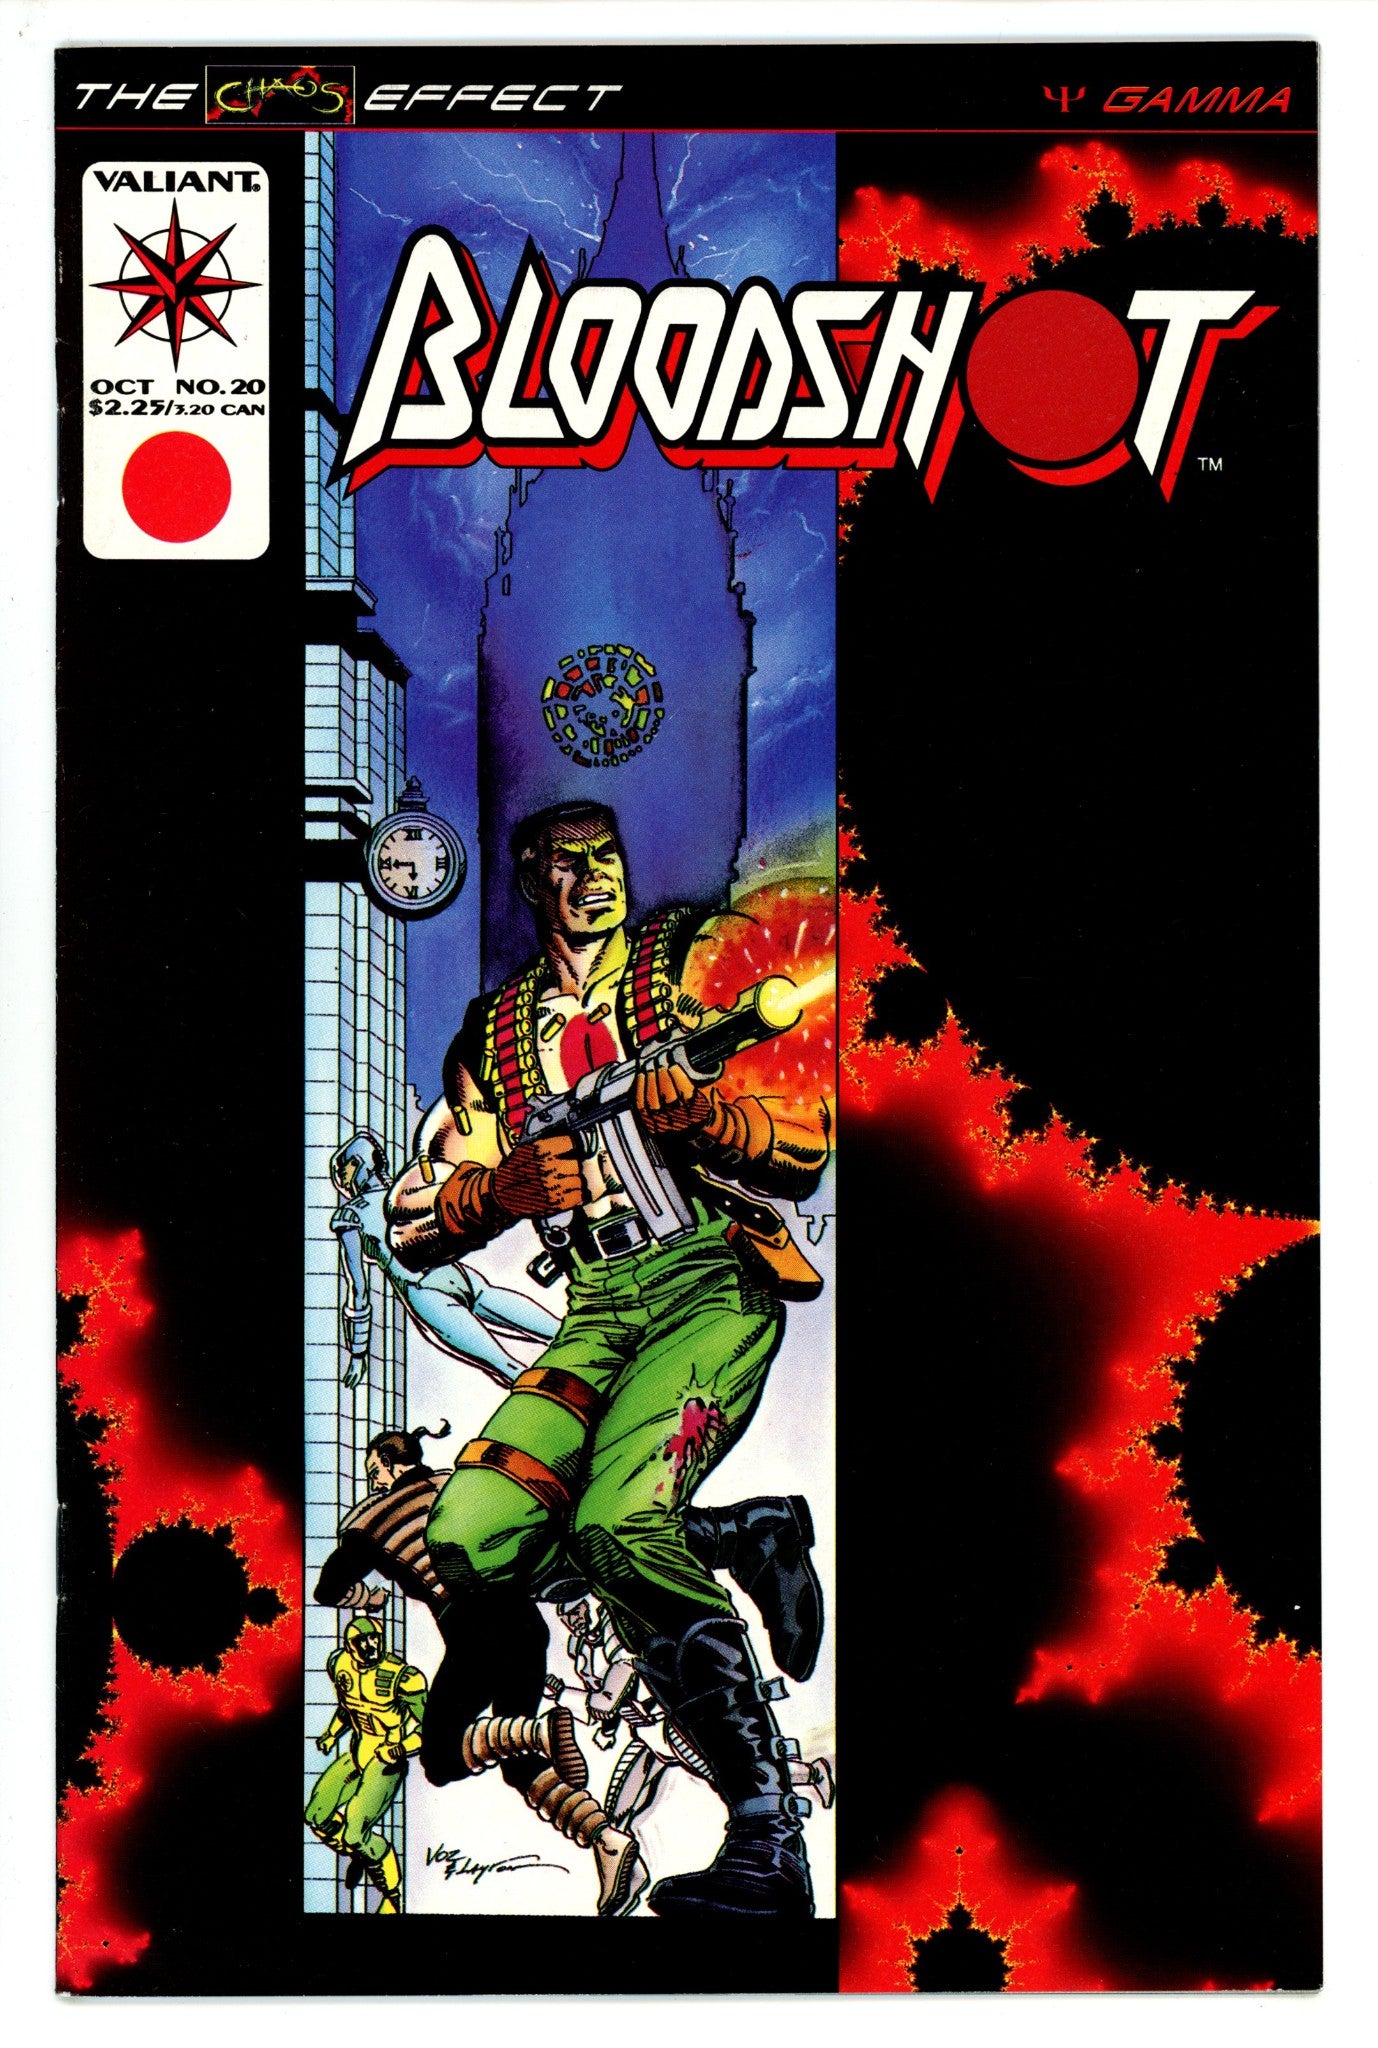 Bloodshot Vol 1 20 (1994)